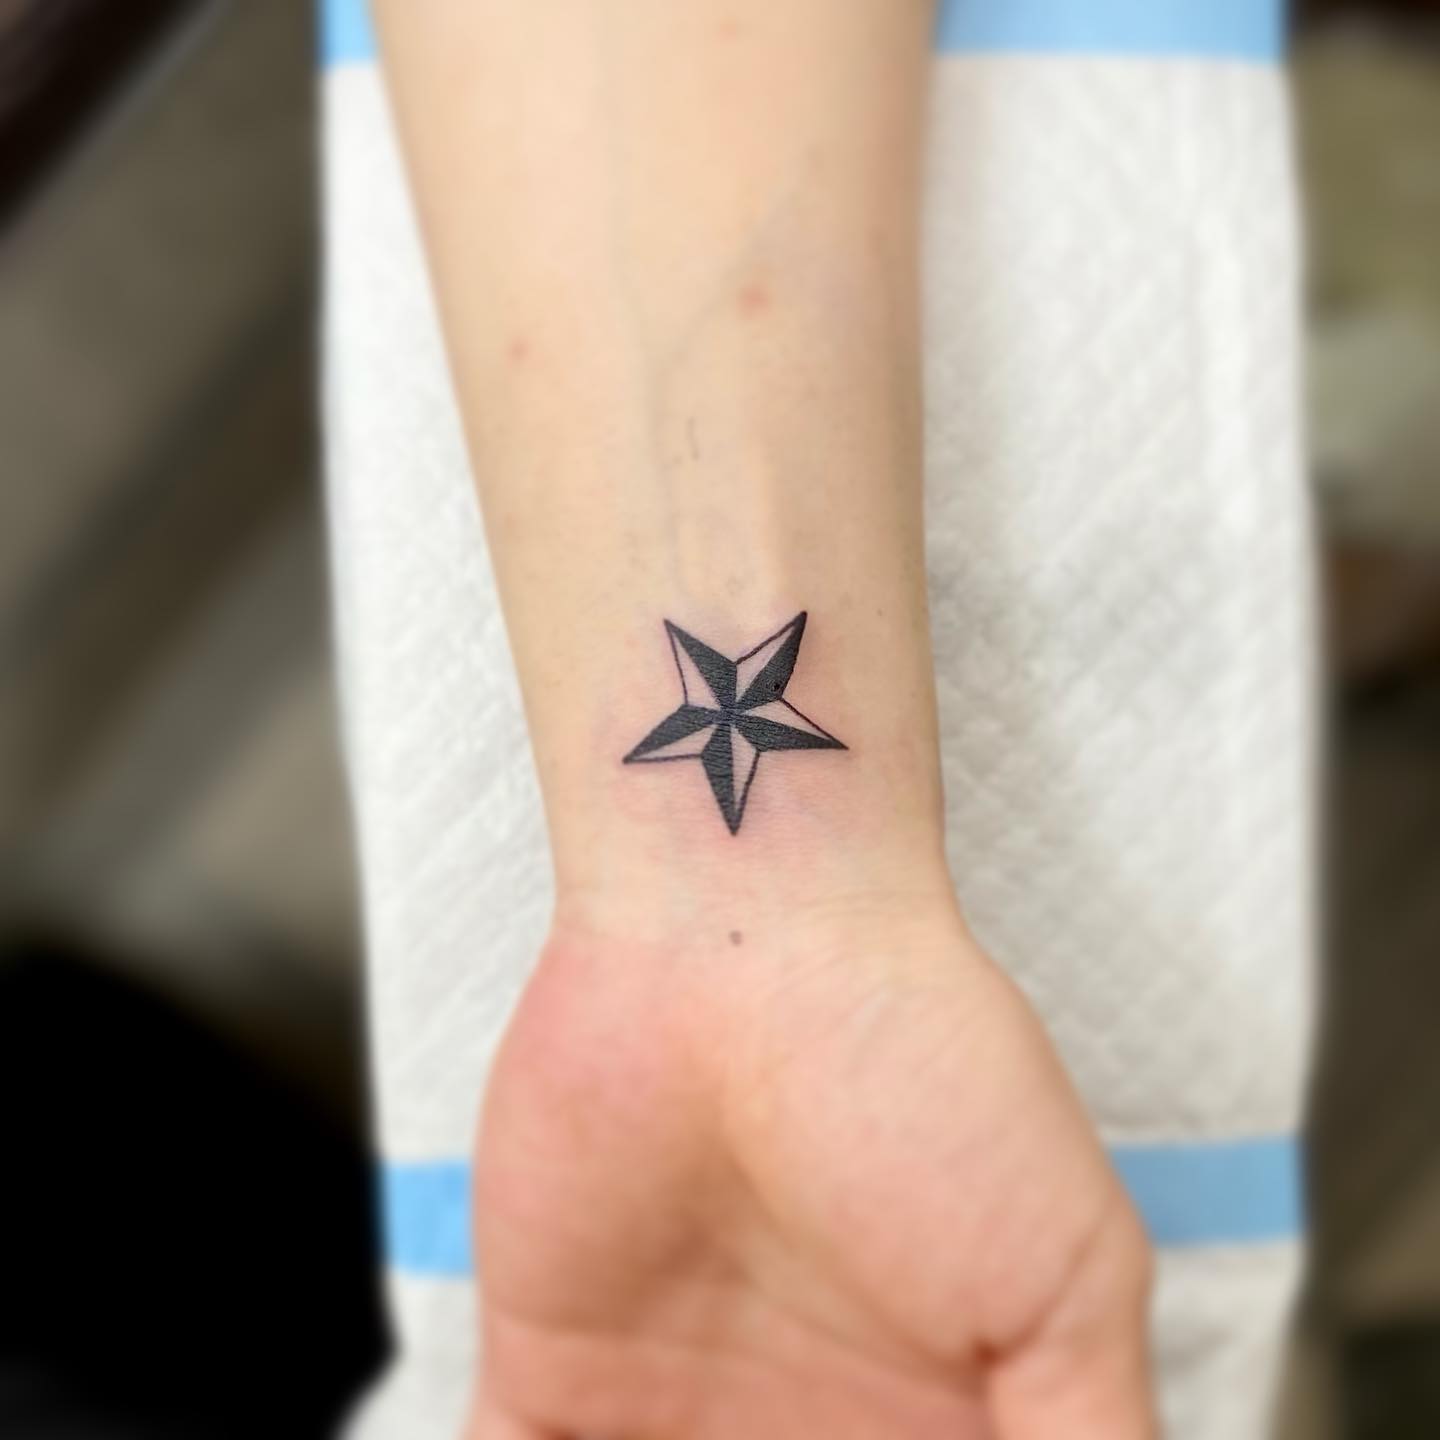 Tatuaje de estrella náutica en la muñeca